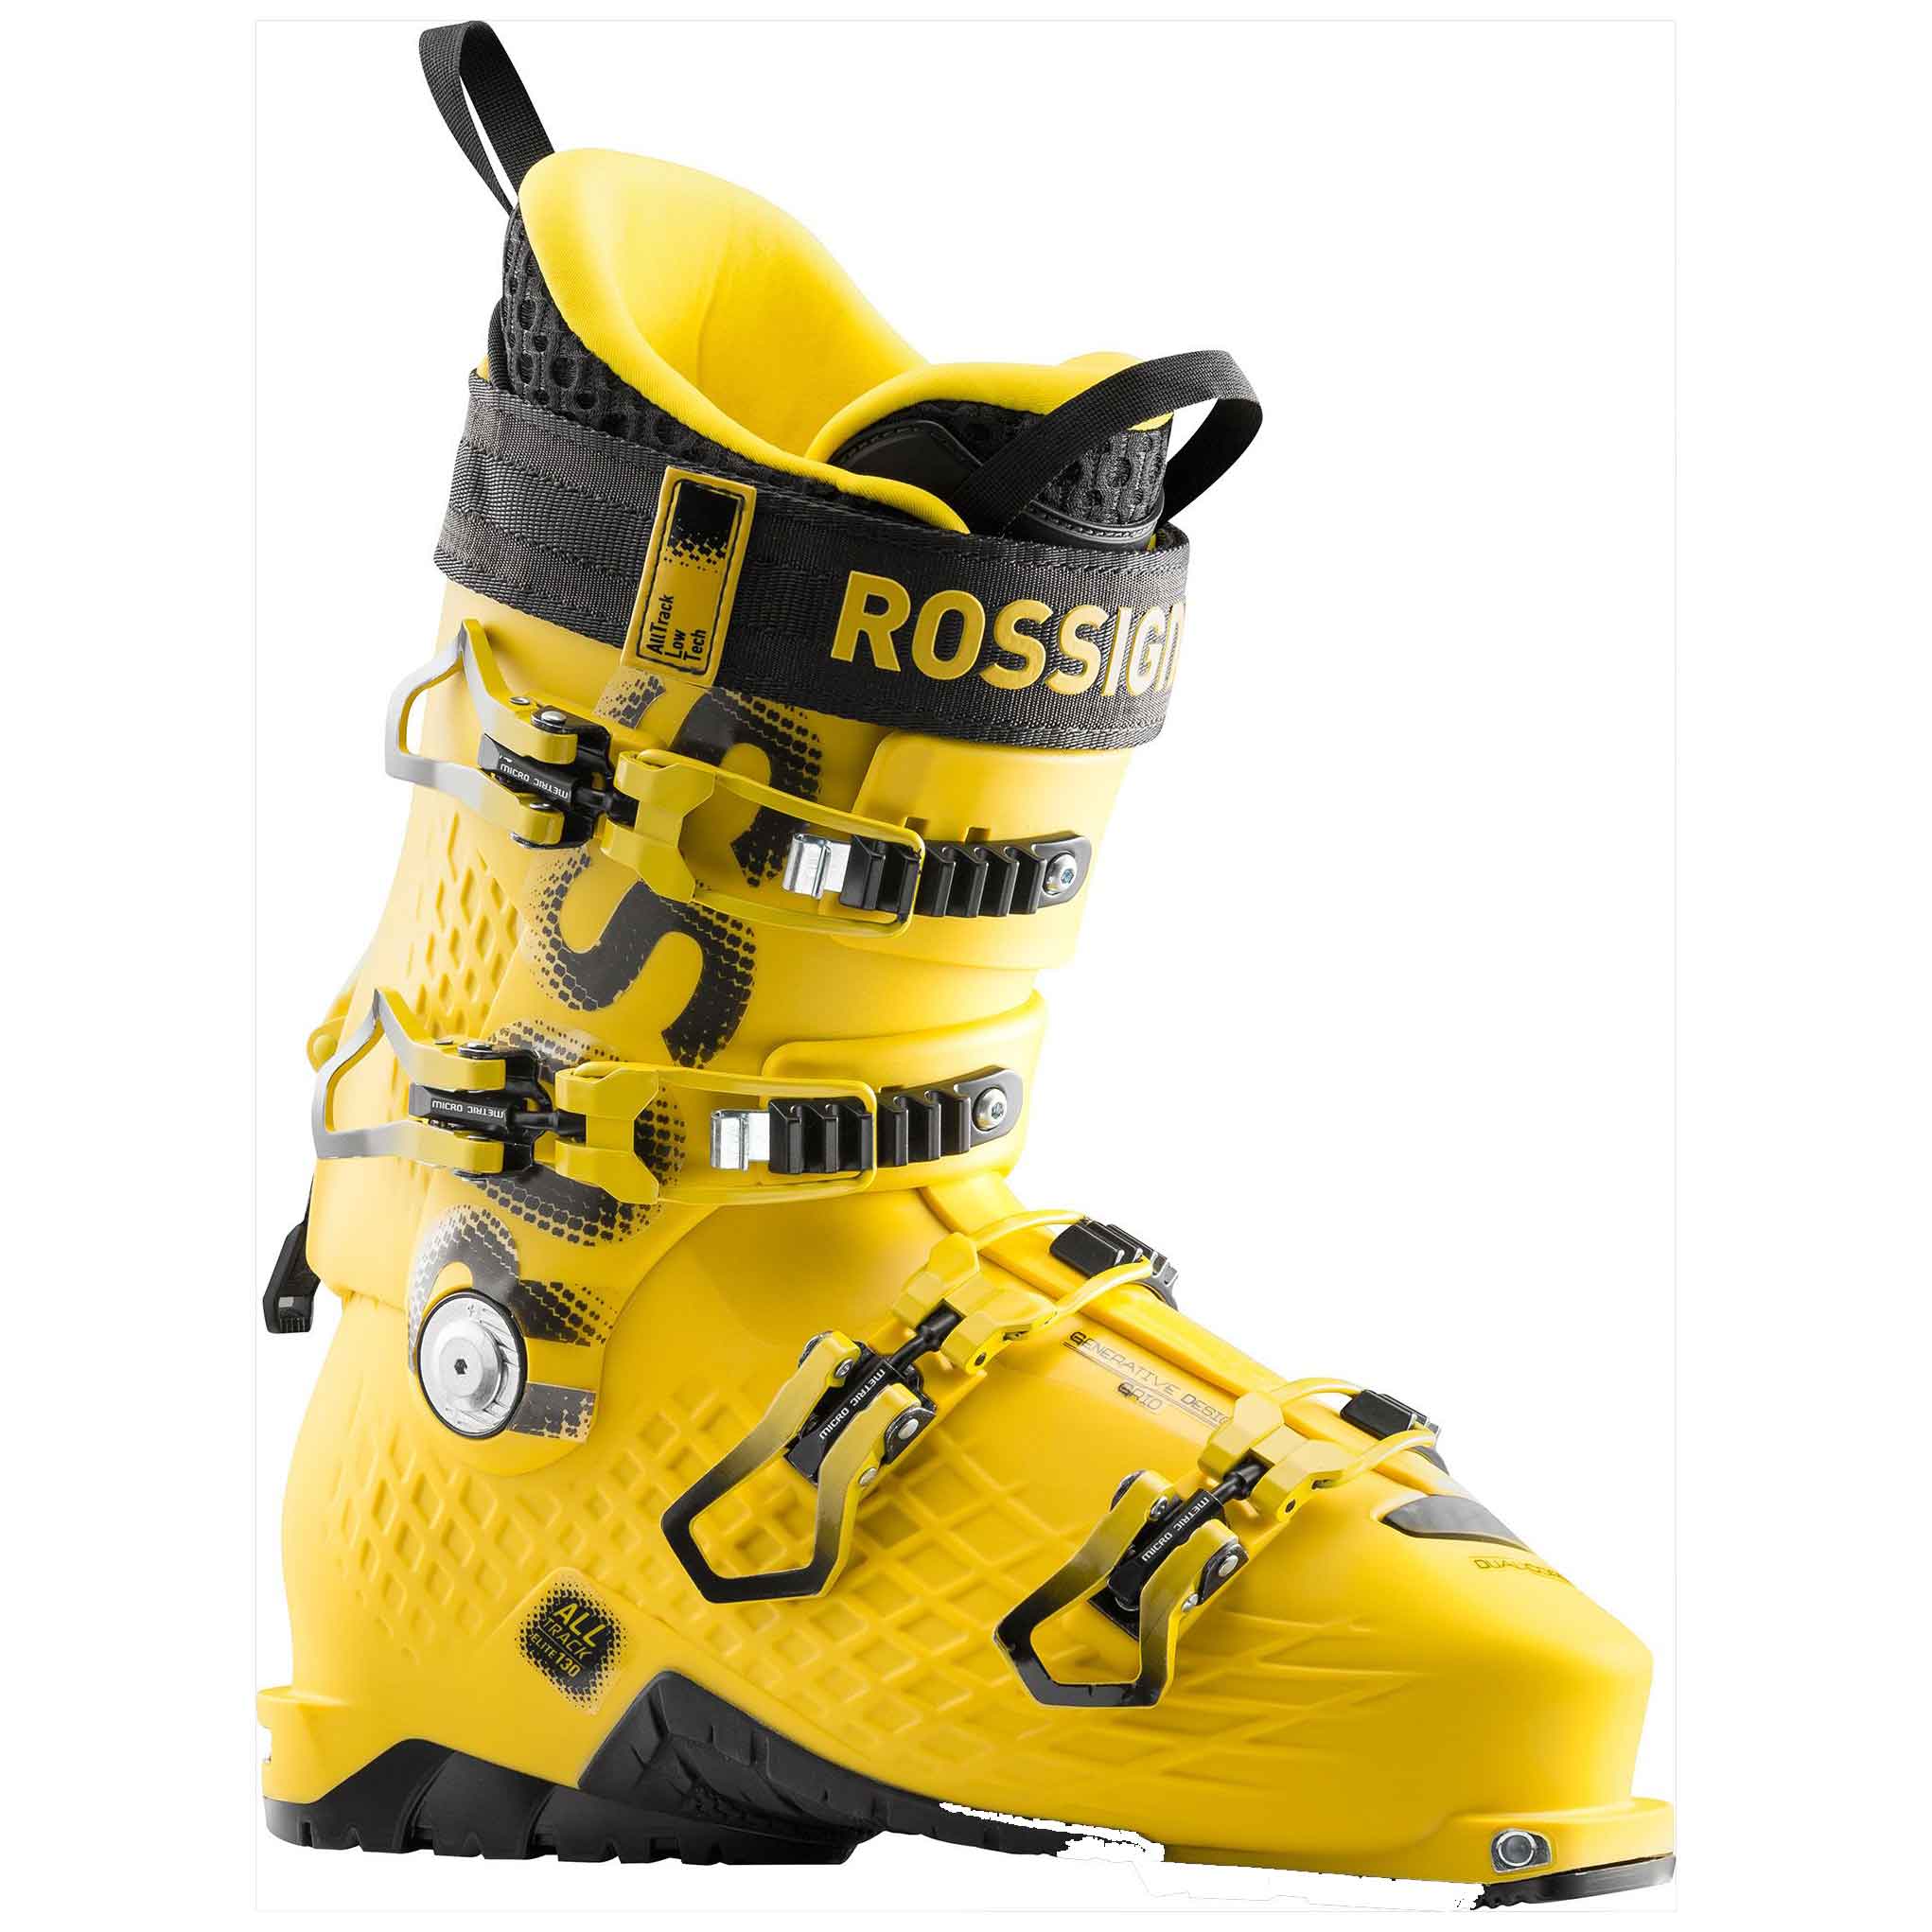 Ski lt. Rossignol ботинки all track. Ботинки для горных лыж Rossignol Alltrack Elite 130 lt. Горнолыжные ботинки Rossignol Yellow. Rossignol sensor Blade Ski Boots.